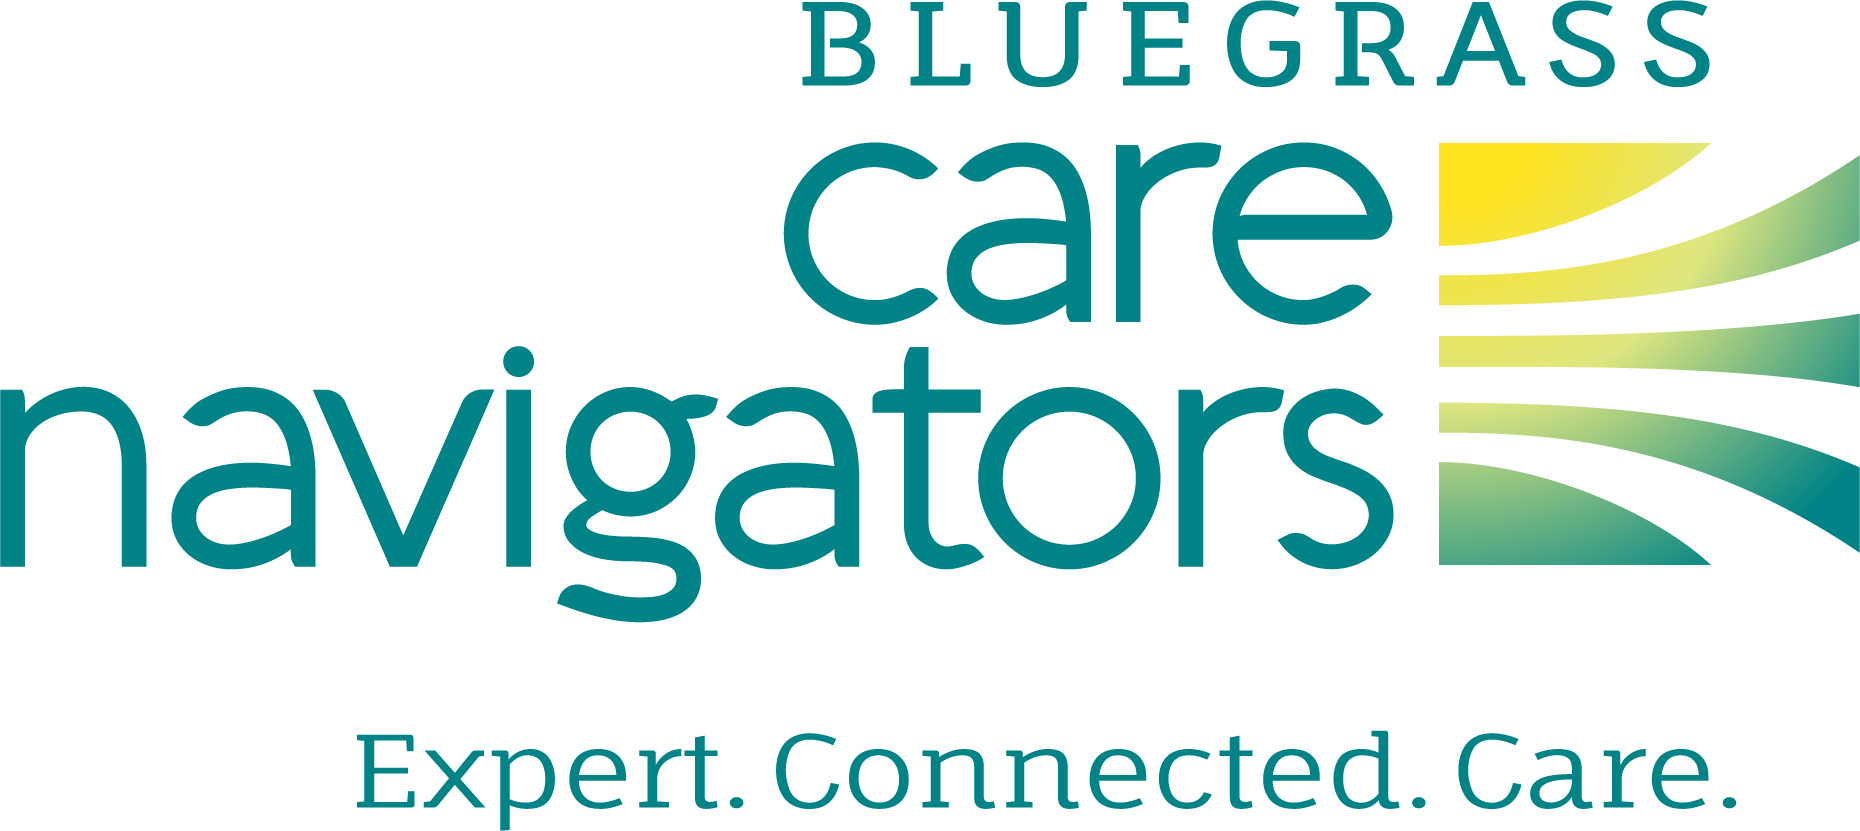 Bluegrass Care Navigators logo